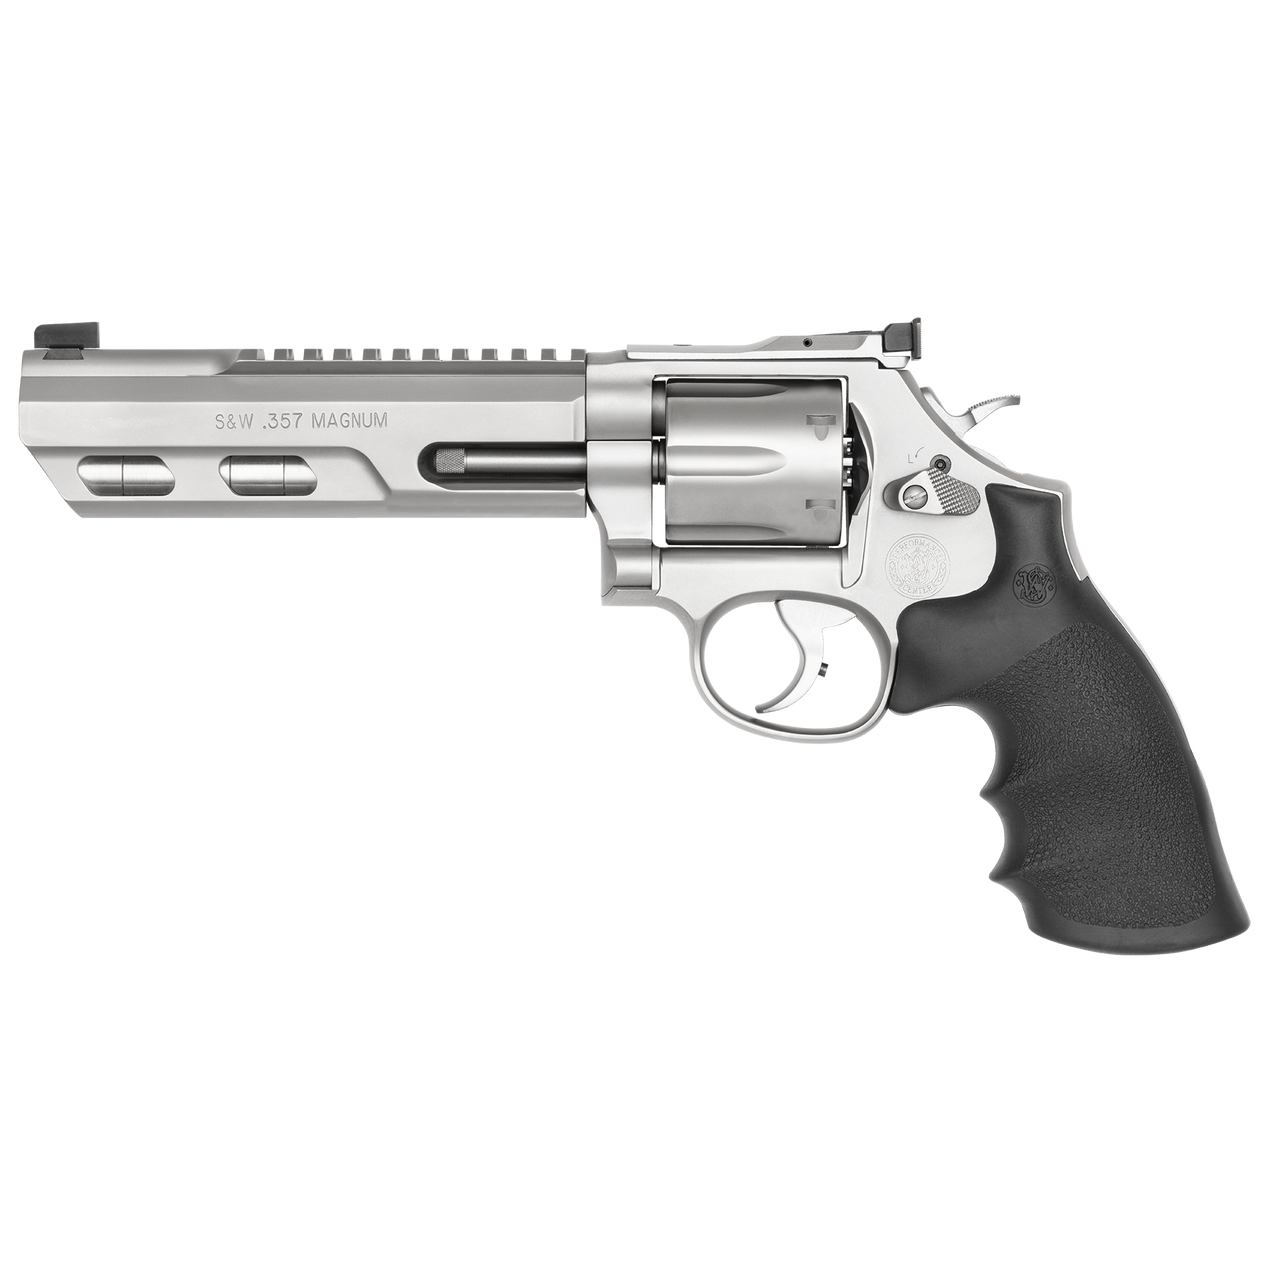 S&W Model 686 Competitor .38/.357 6” Barrel Revolver – SKU 170319 – 6RD